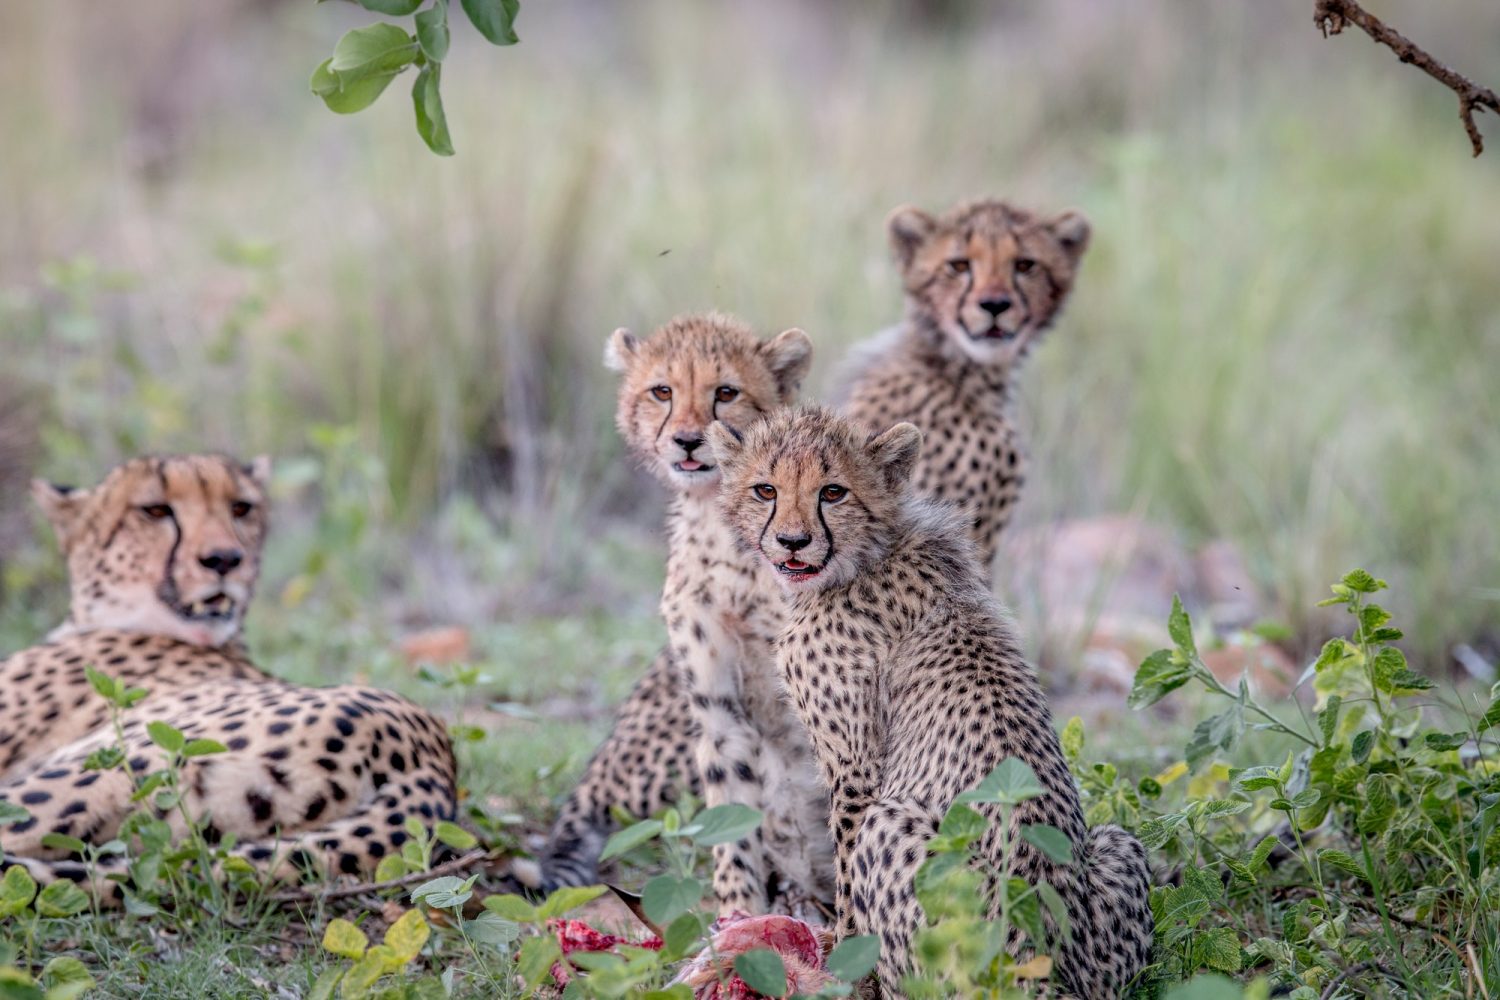 Tanzania Tours and Safaris - Cheetah cubs starring at the camera.